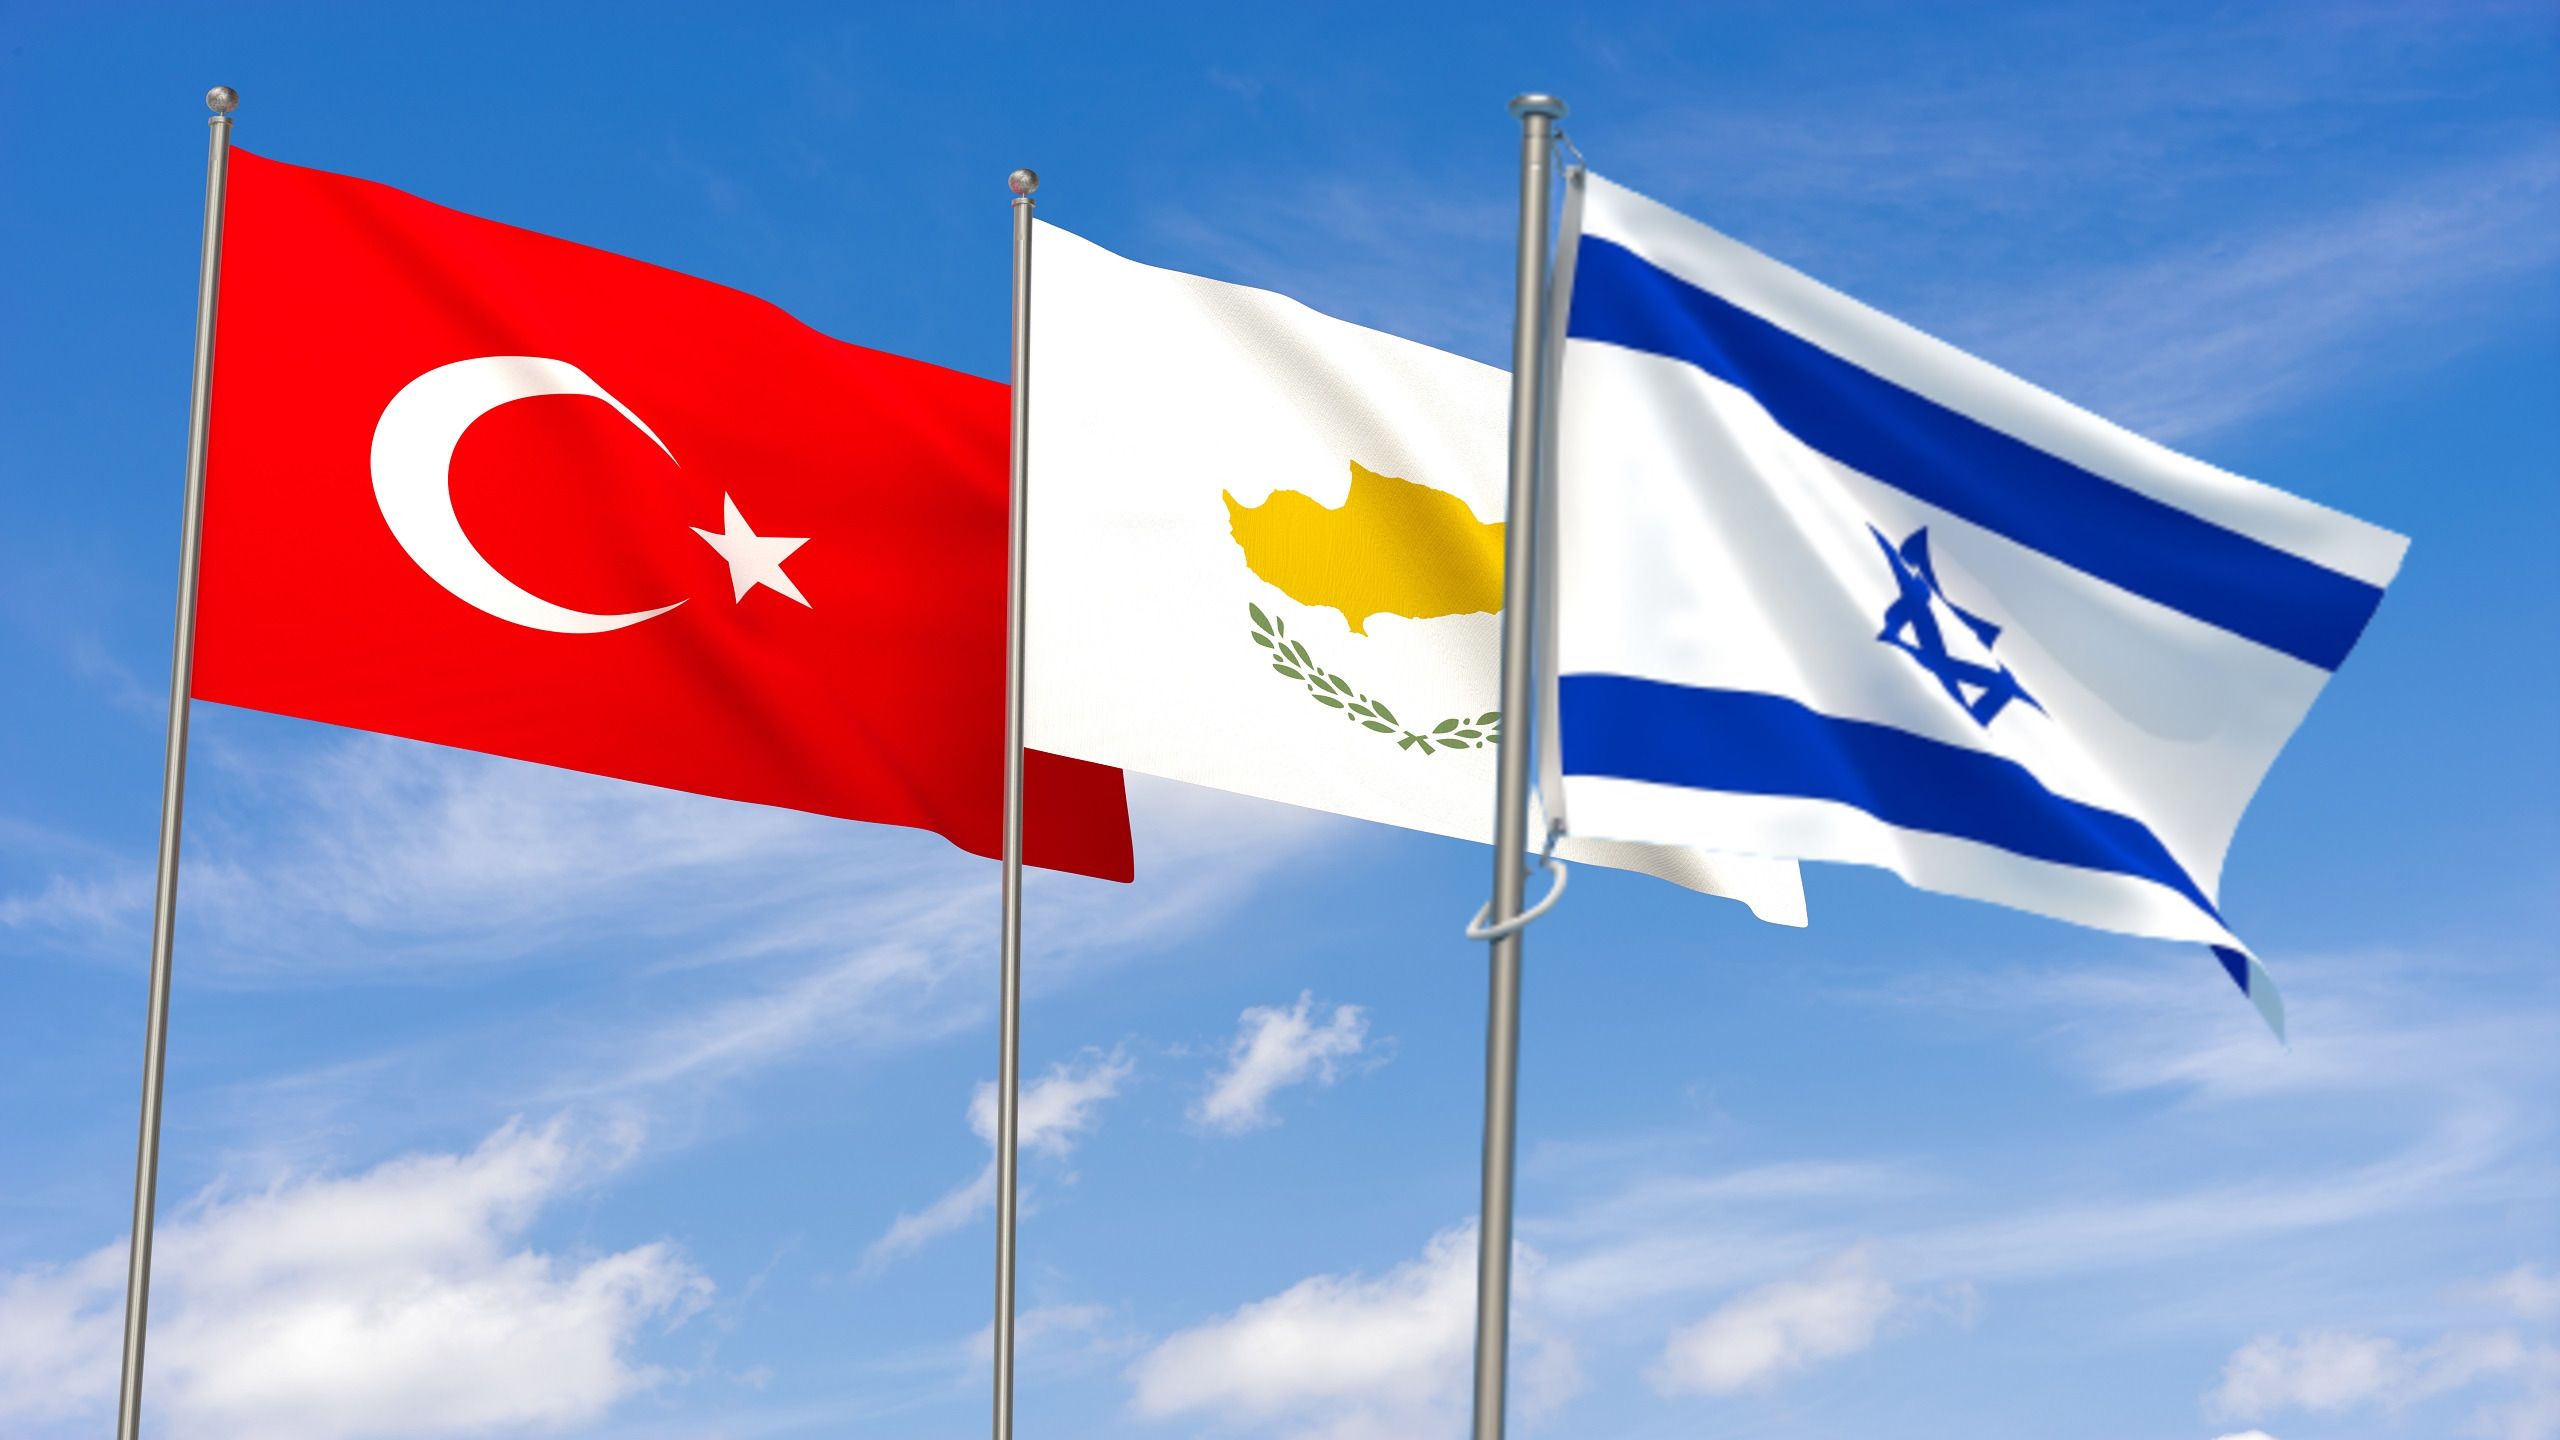 Netanyahu Postpones Trips to Cyprus, Turkey, Following Surgery